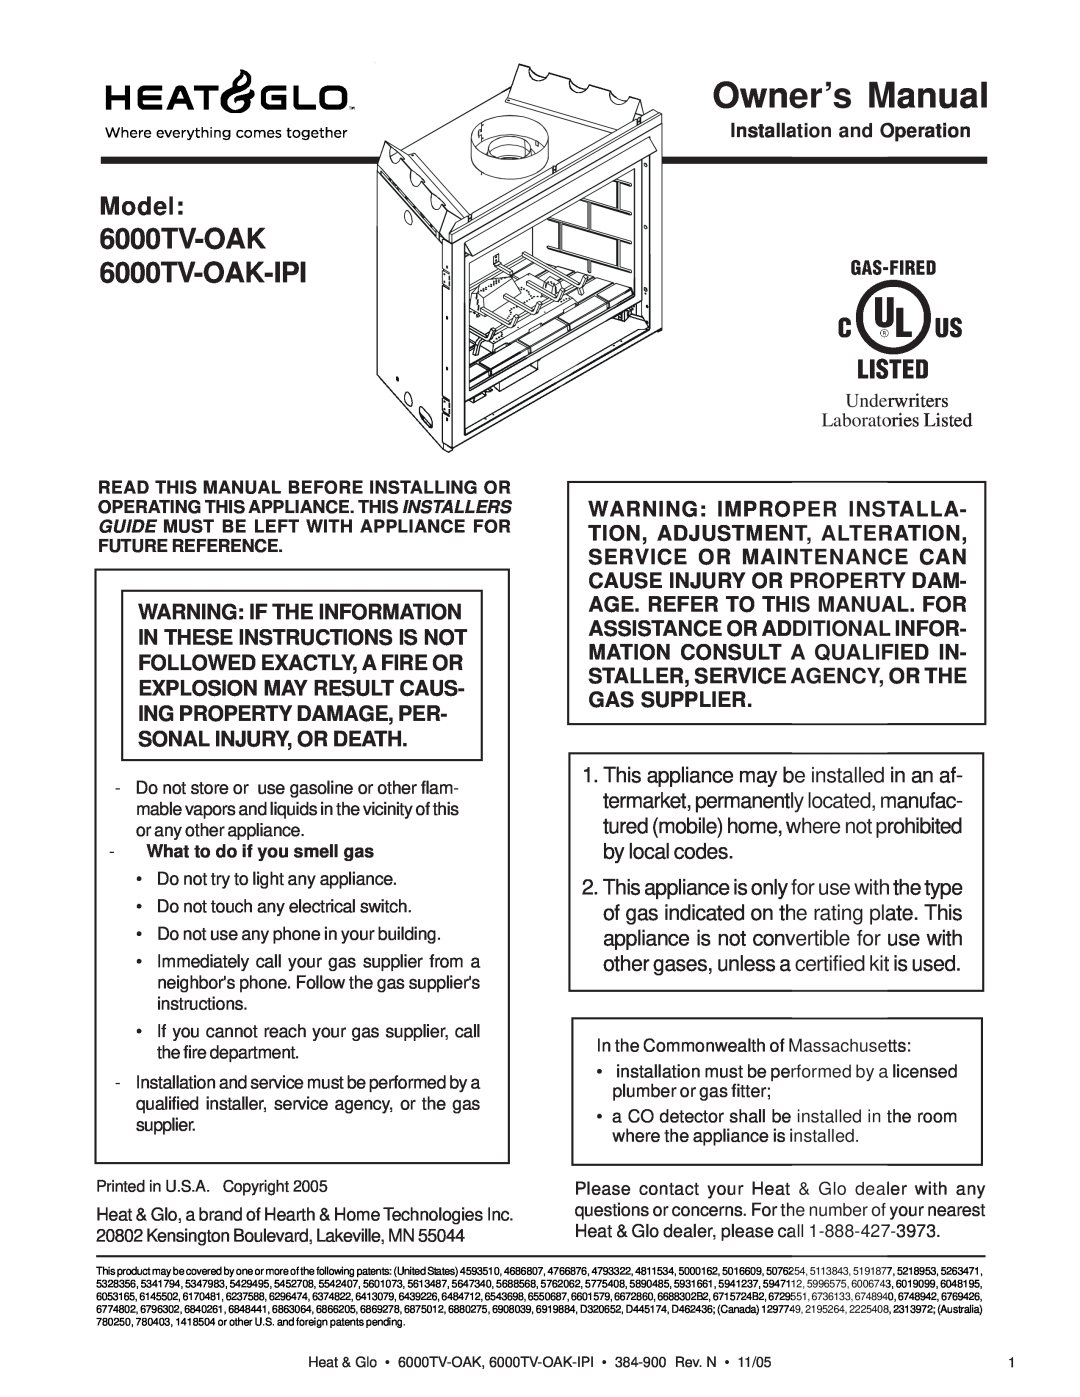 Heat & Glo LifeStyle owner manual 6000TV-OAK 6000TV-OAK-IPI, Model, Installation and Operation 